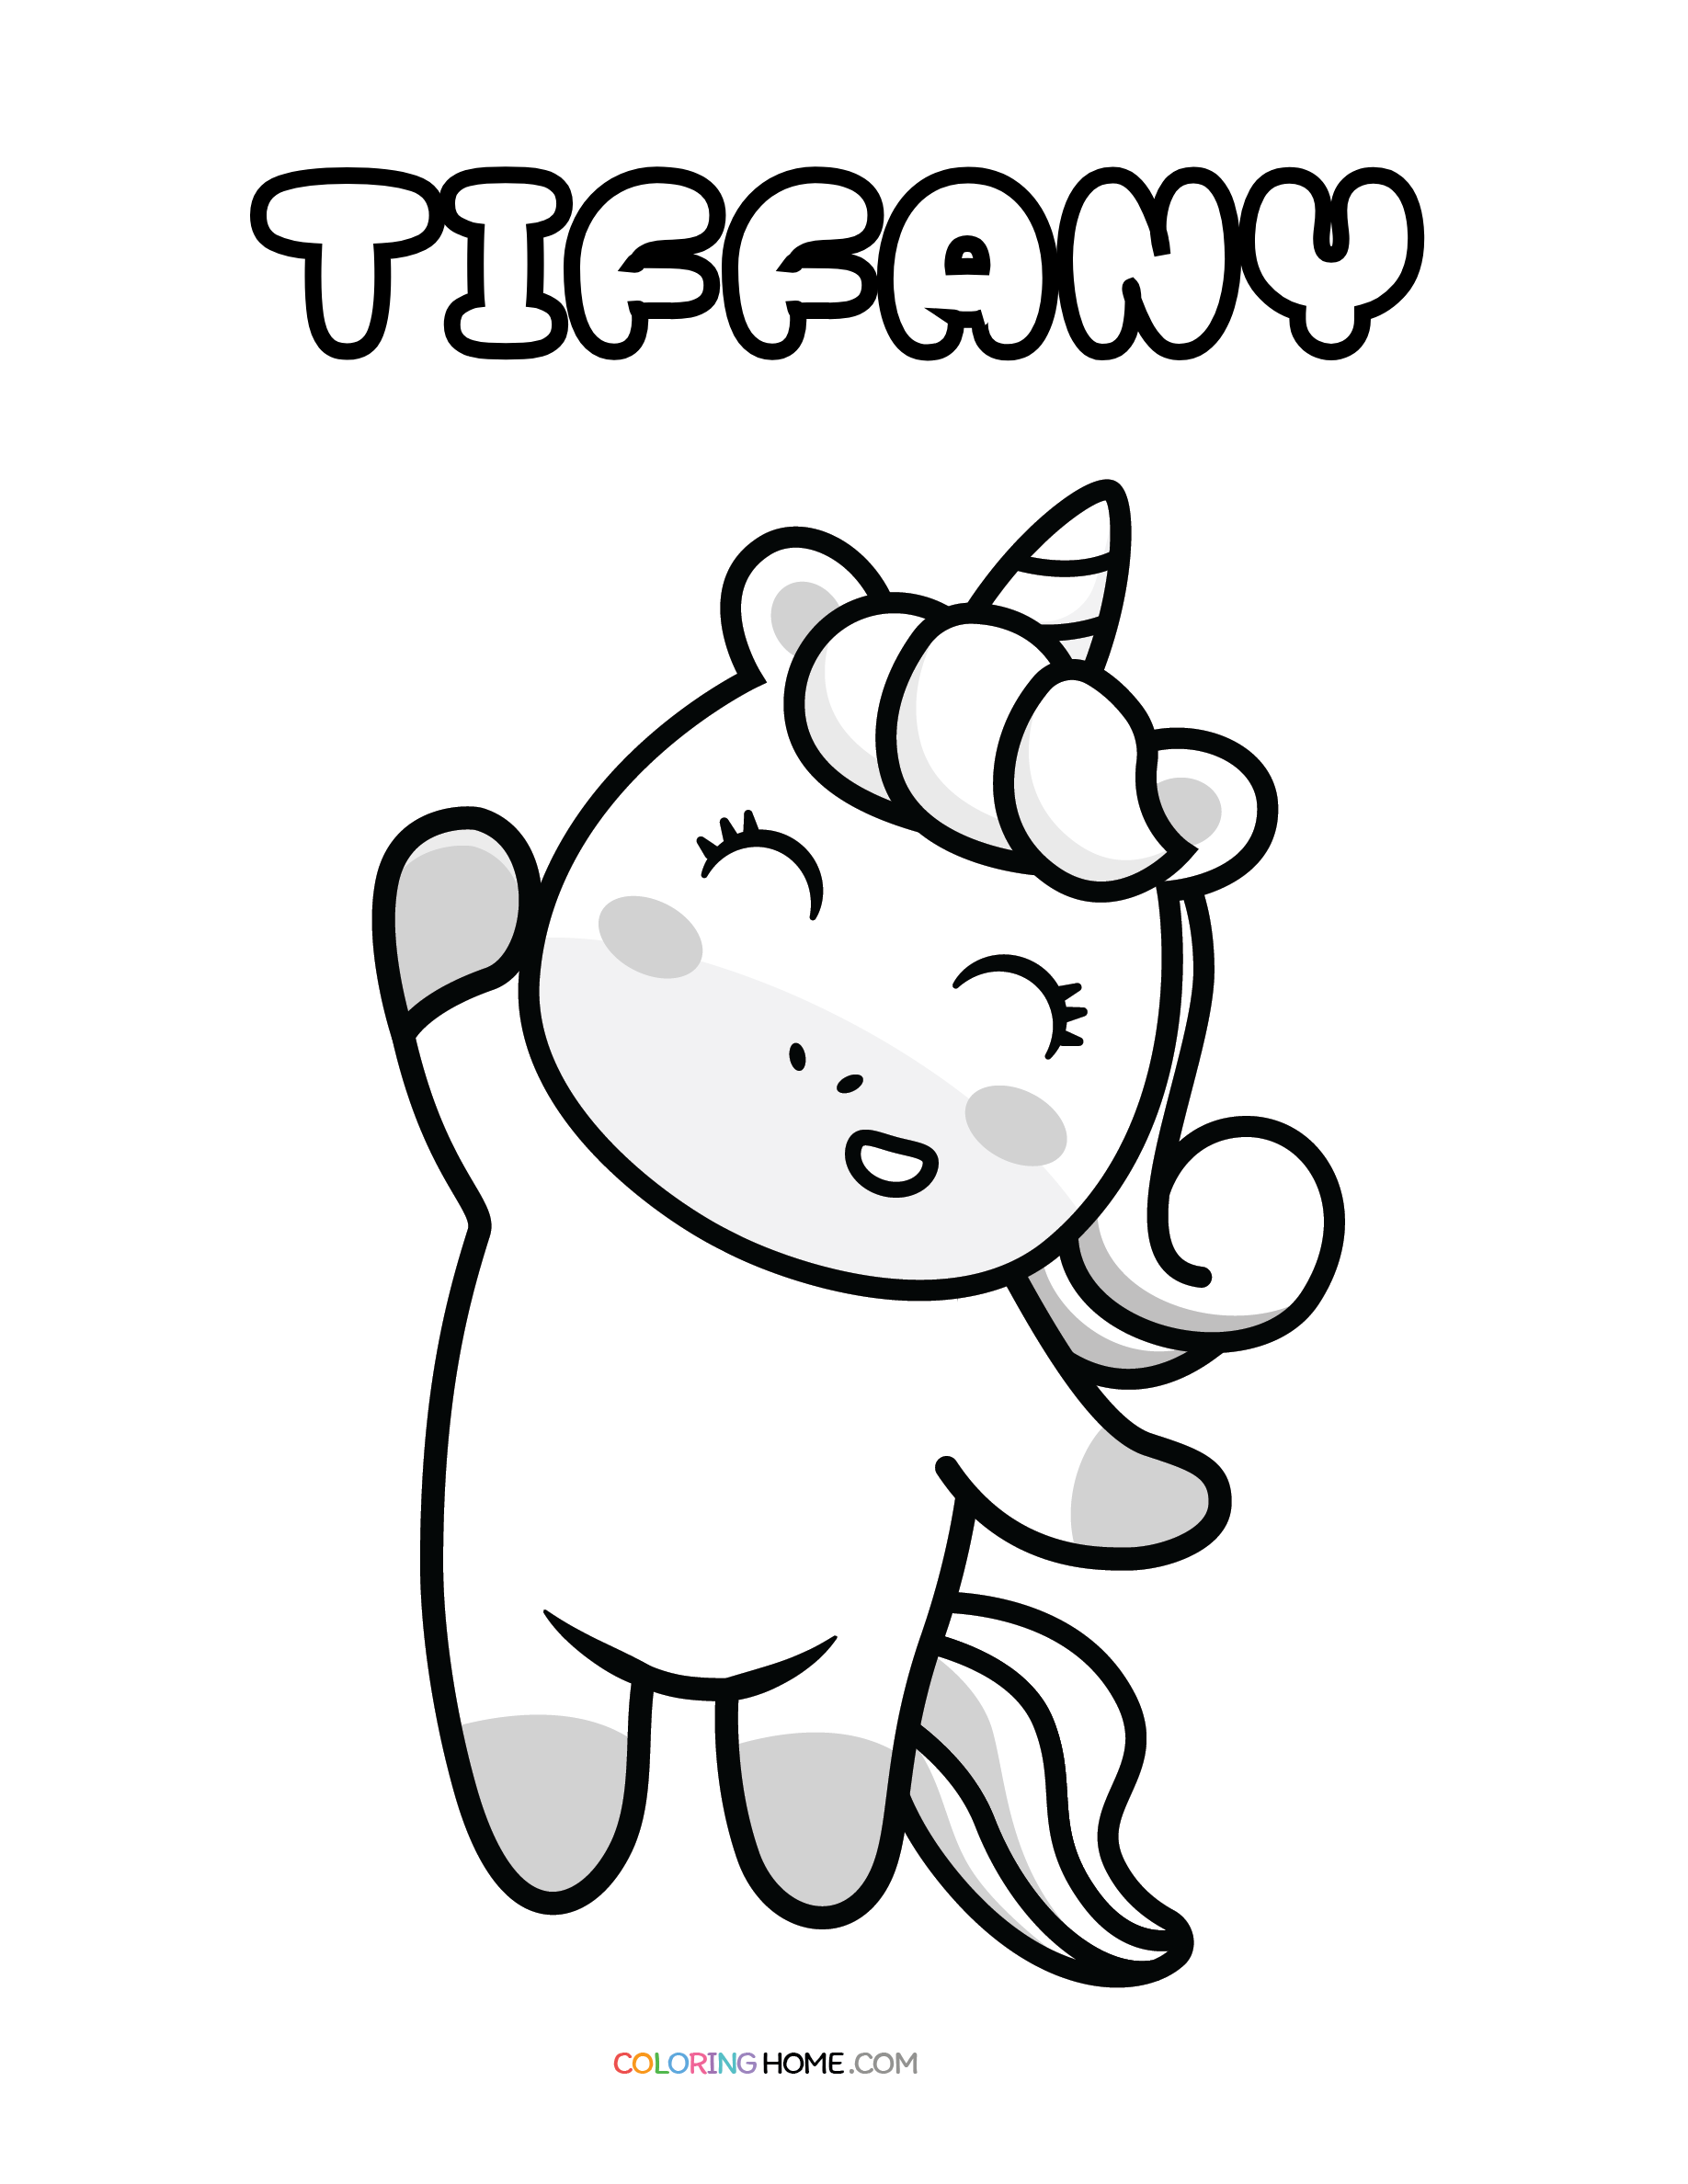 Tiffany unicorn coloring page